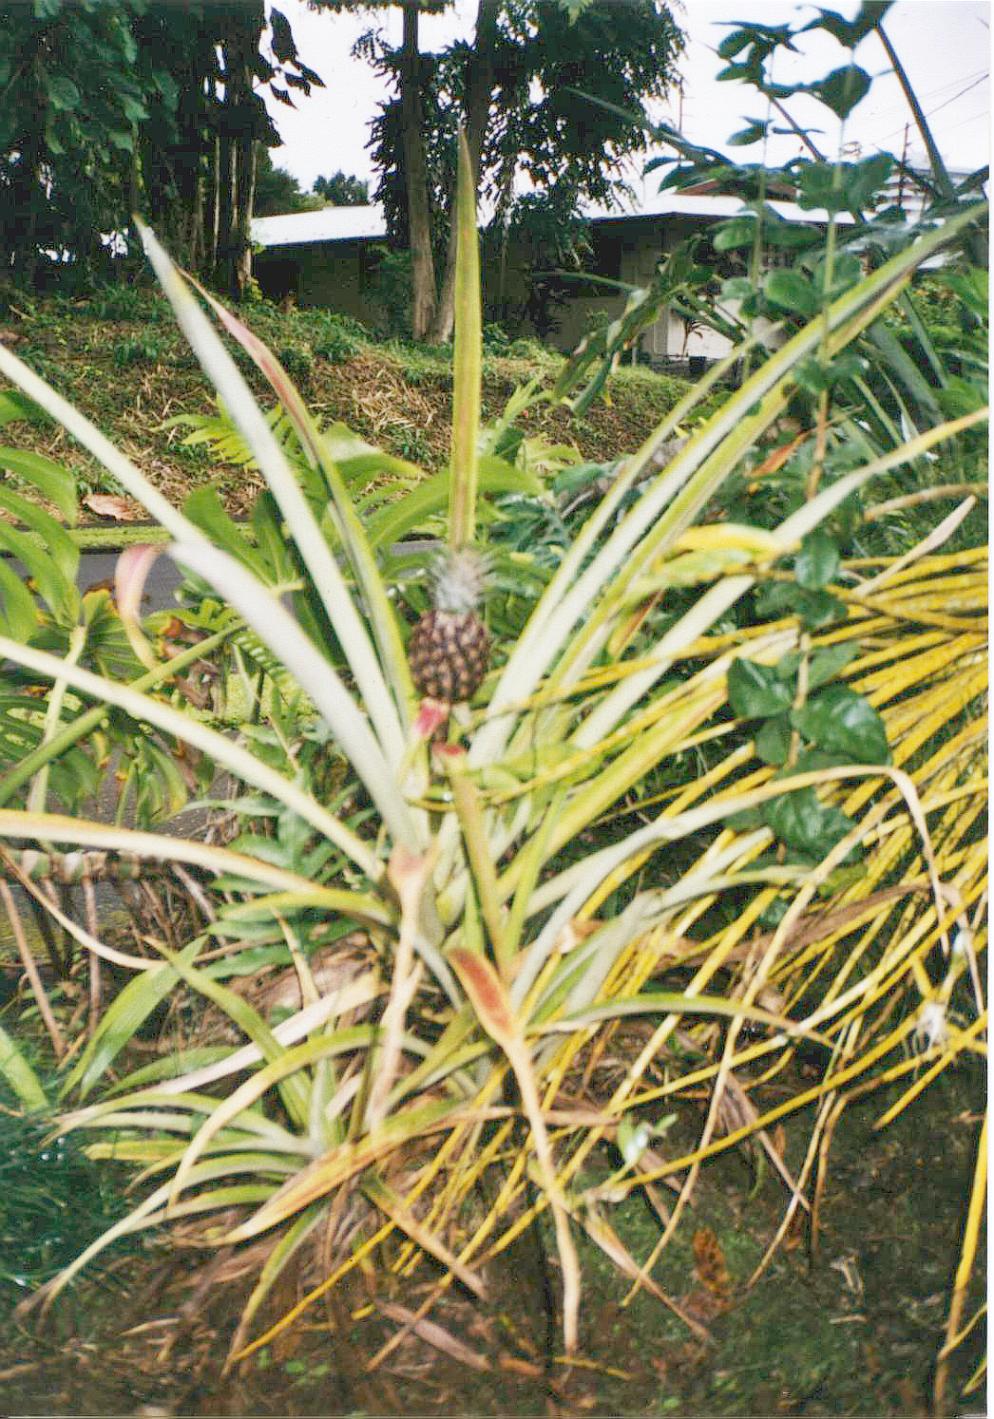 'Ananaspflanze';return true